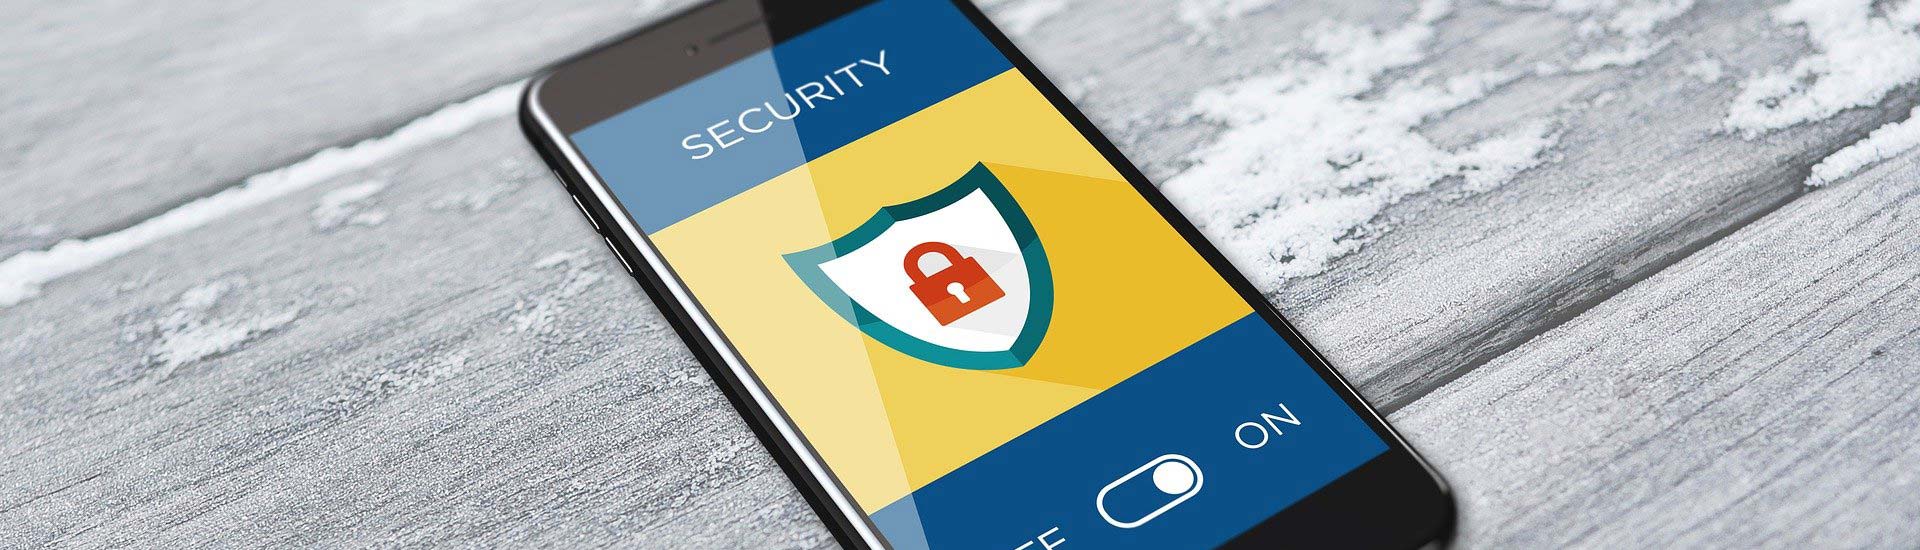 Smart Security | San Lee Security